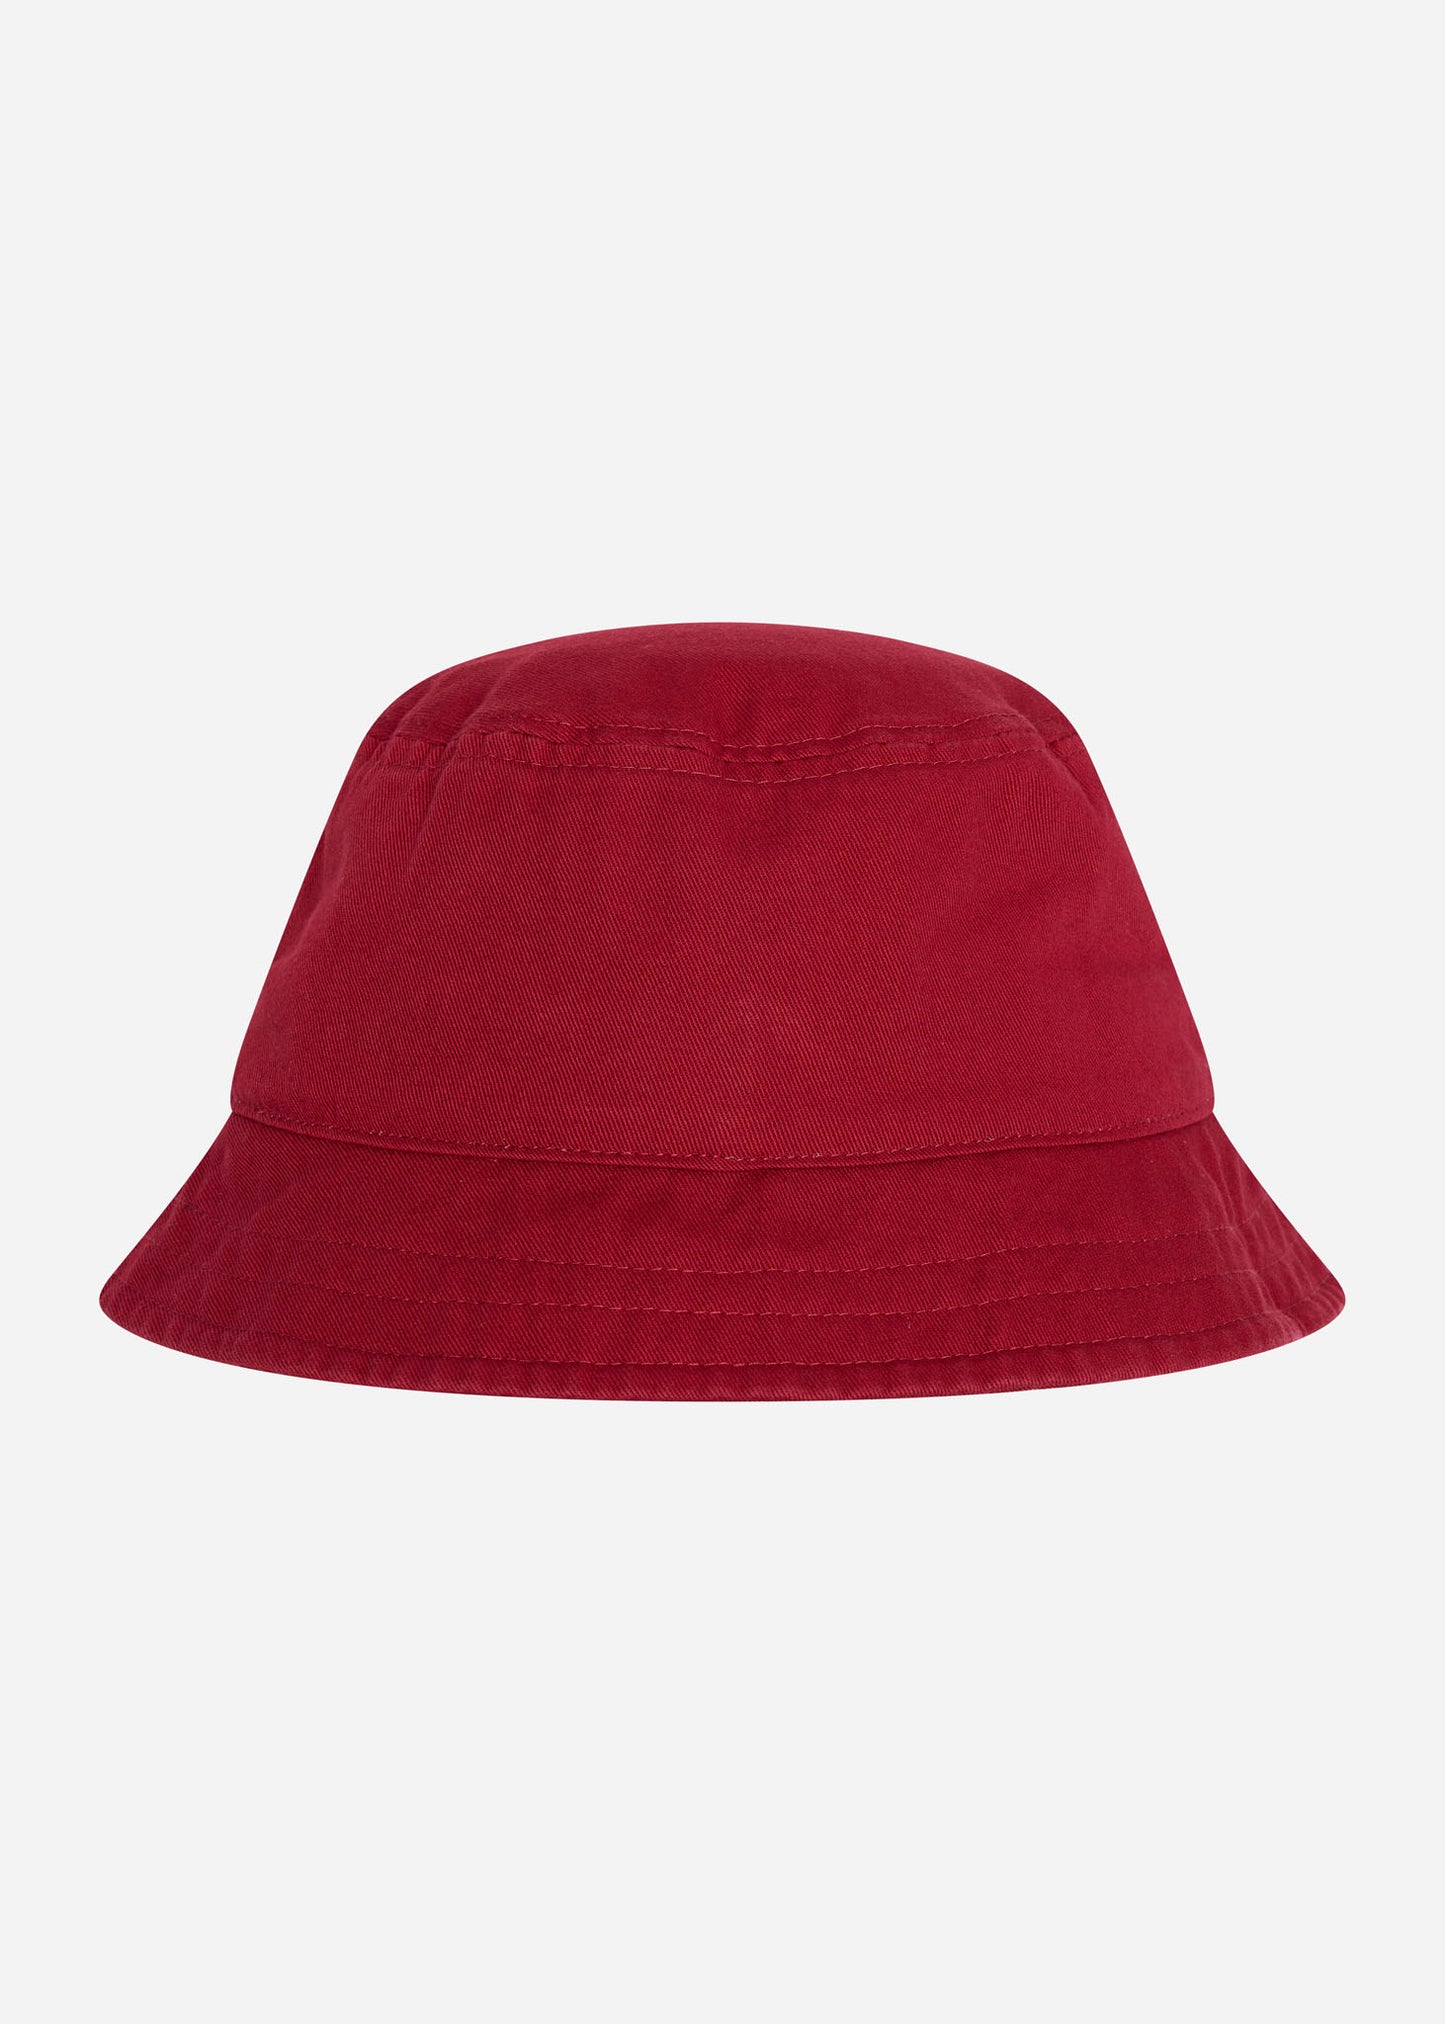 lyle and scott bucket hat red